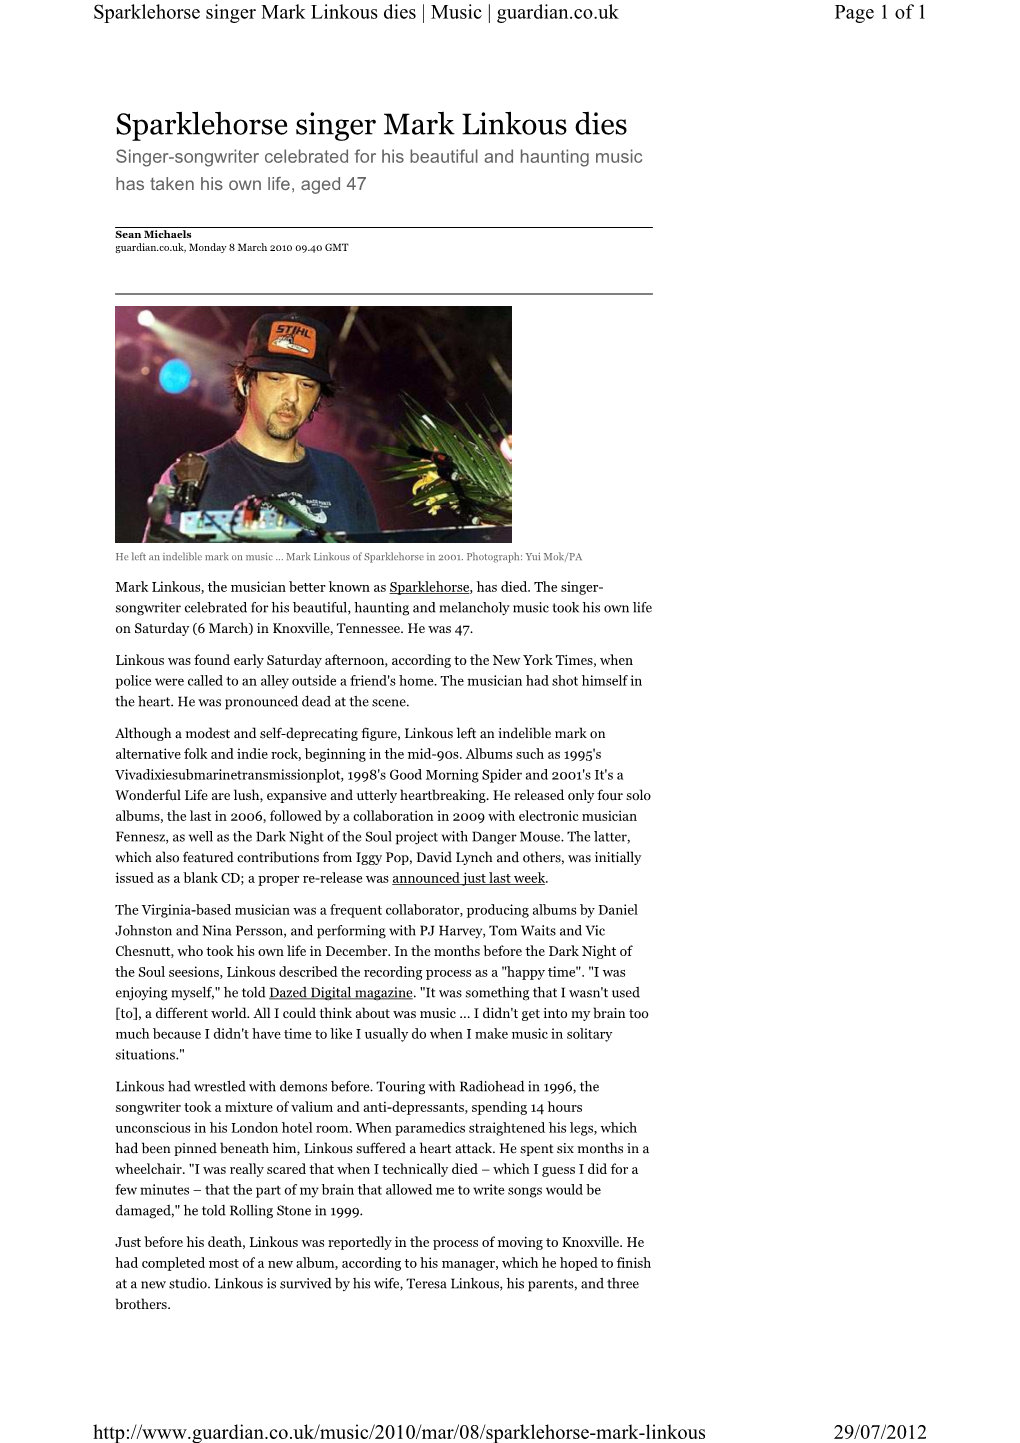 Sparklehorse Singer Mark Linkous Dies | Music | Guardian.Co.Uk Page 1 of 1